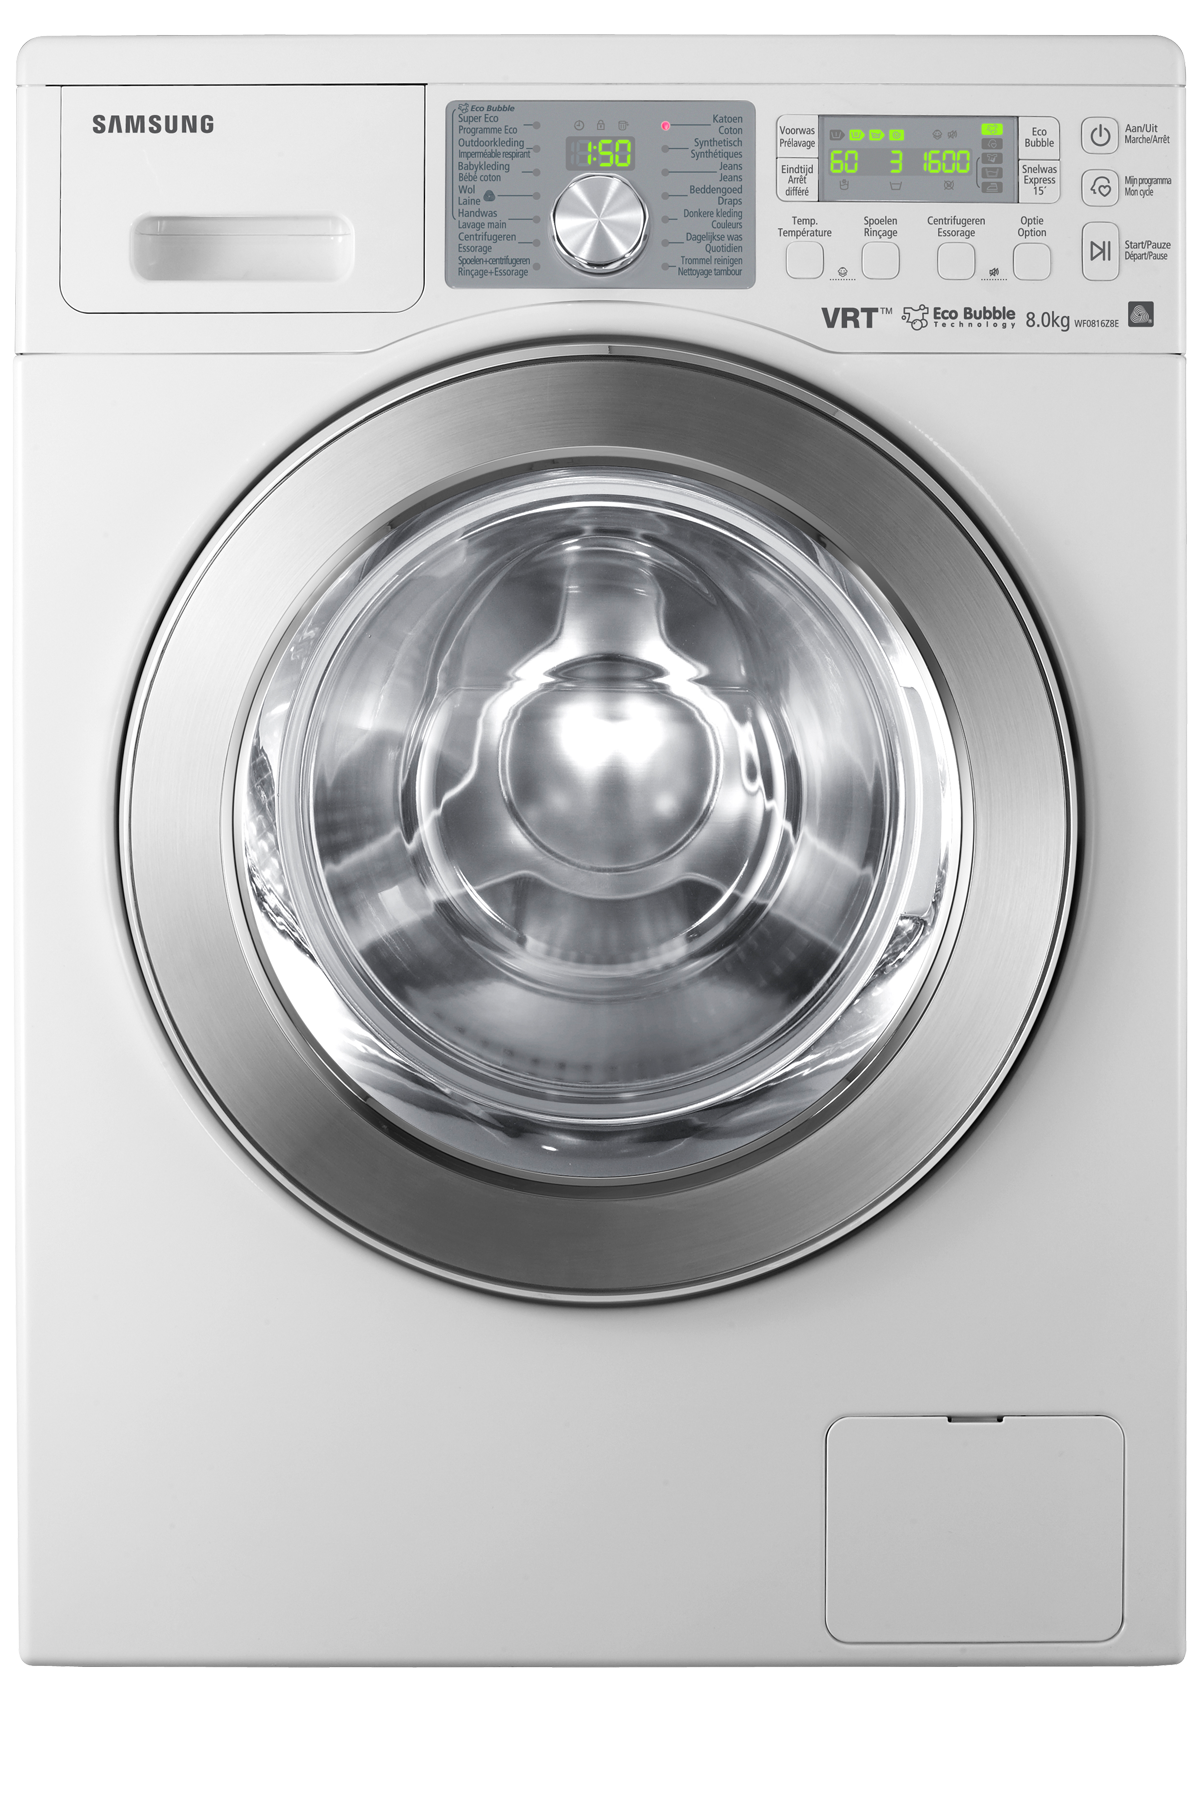 wet Buitenland Bedankt A+++ EcoBubble 1600 toeren 8 KG Wasmachine | Samsung Service BE